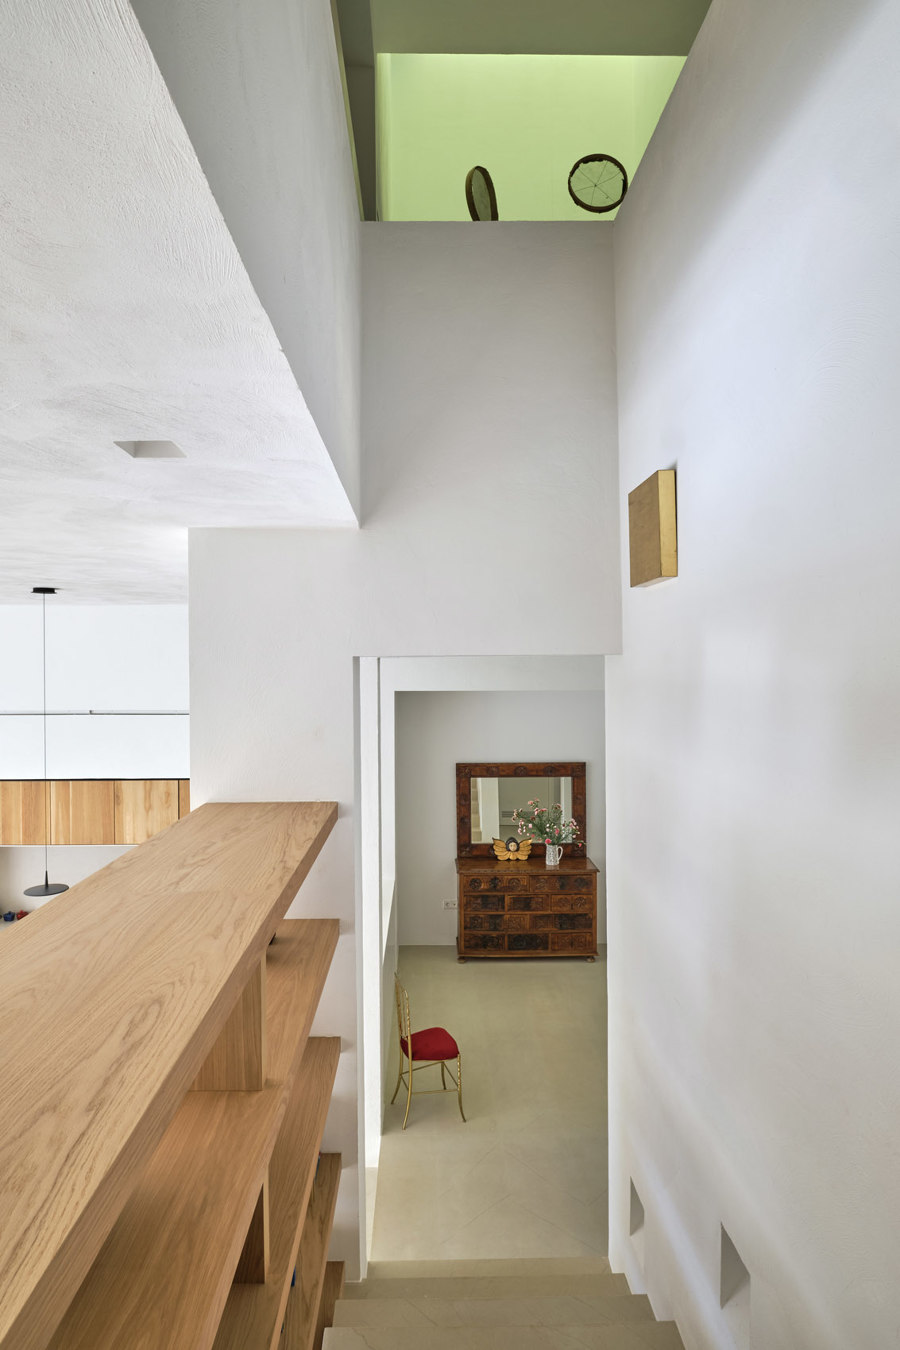 Casa Hikari de Alejandro Giménez Architects | Casas Unifamiliares